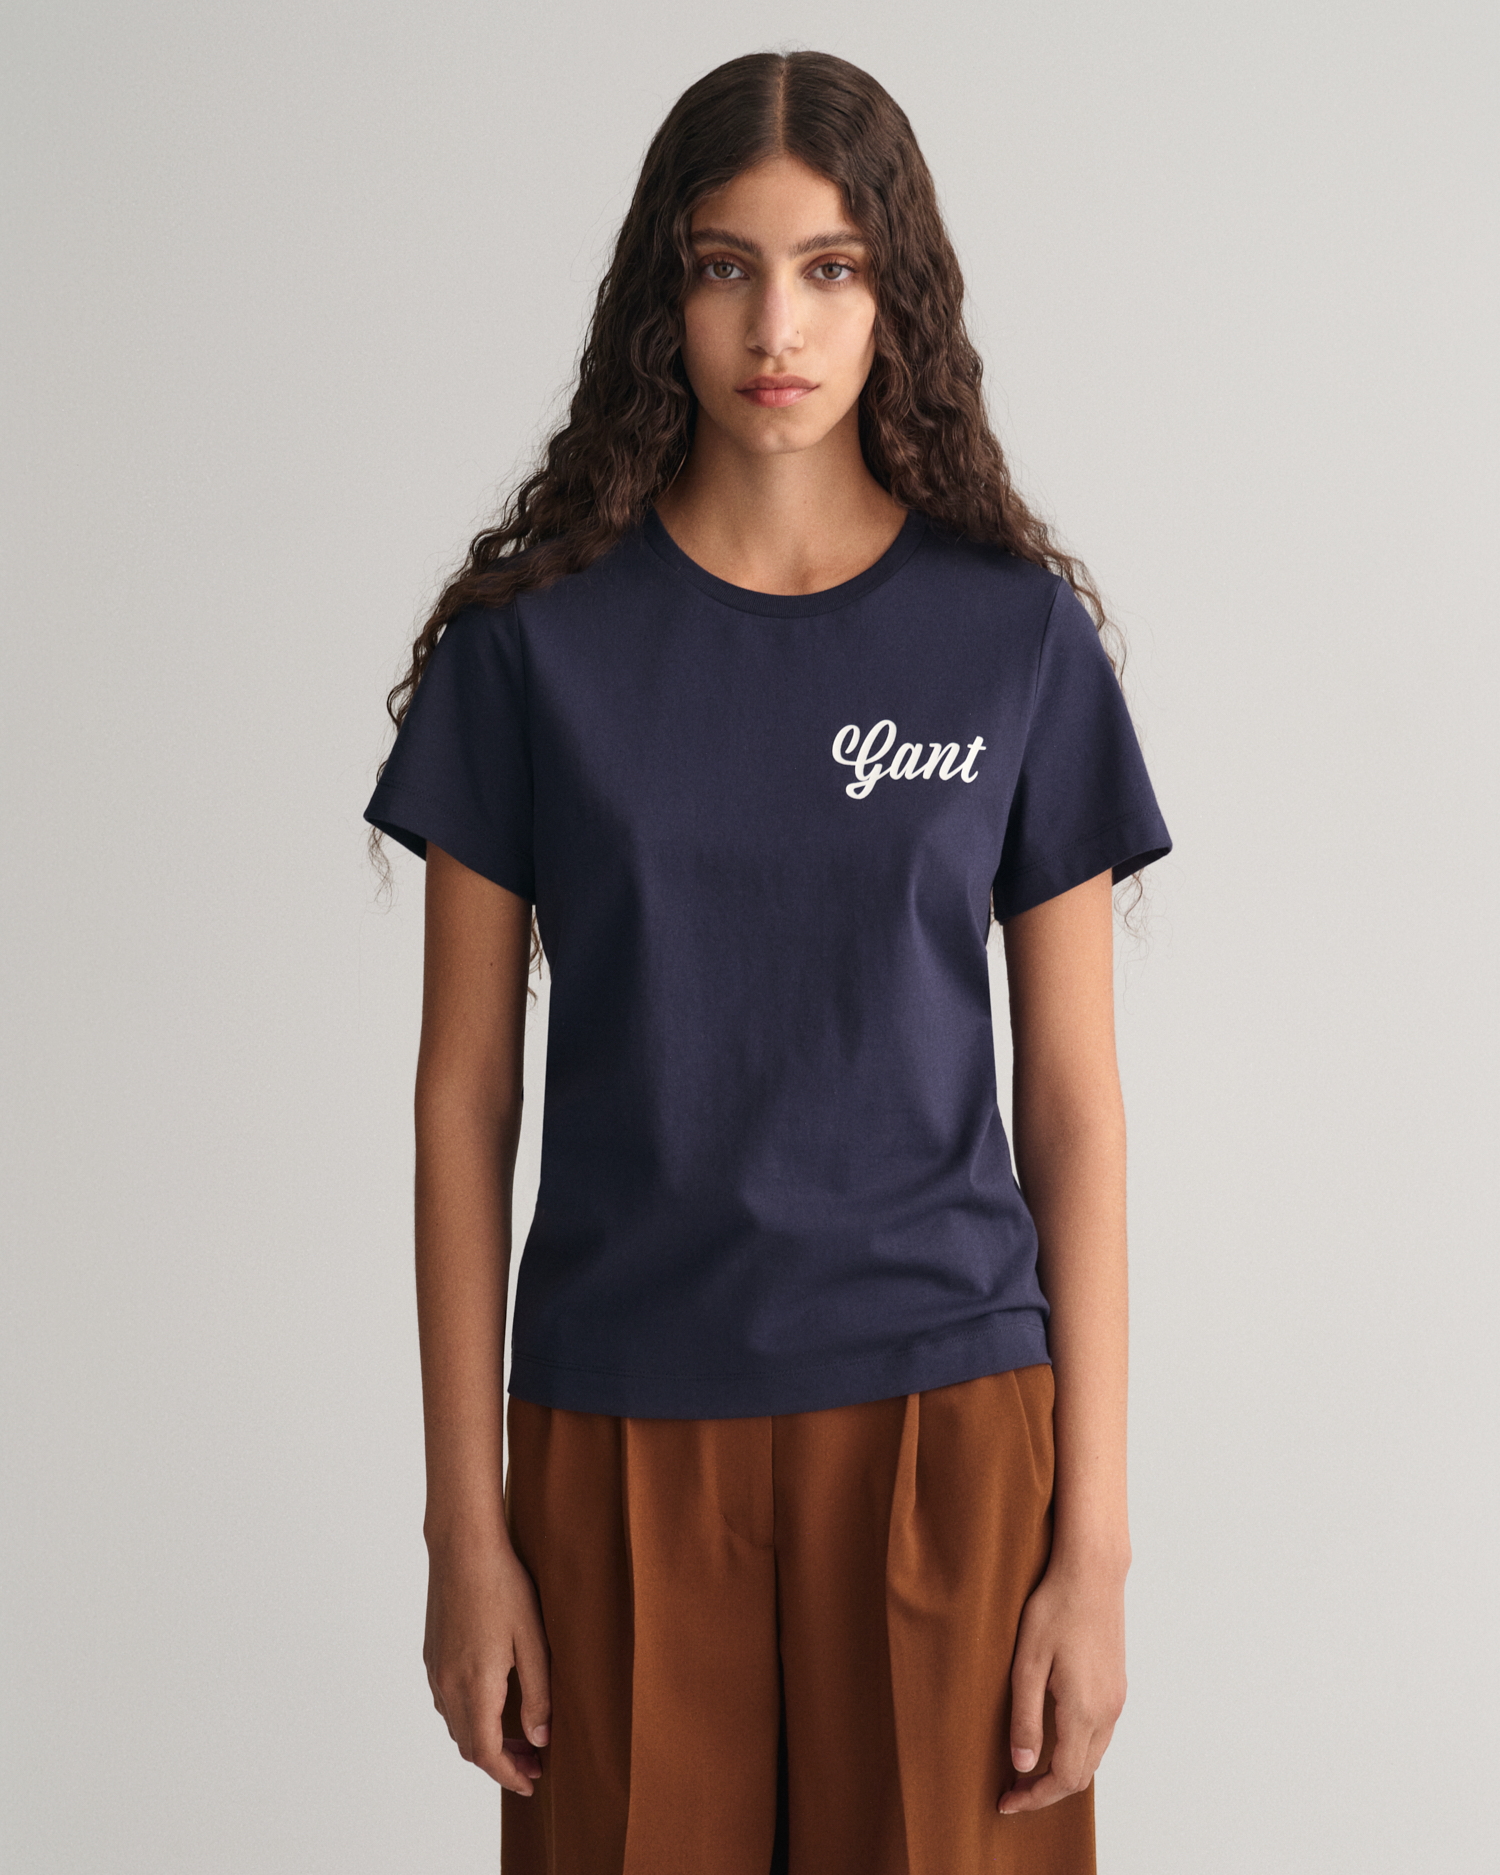 GANT Women Small Graphic T-Shirt ,